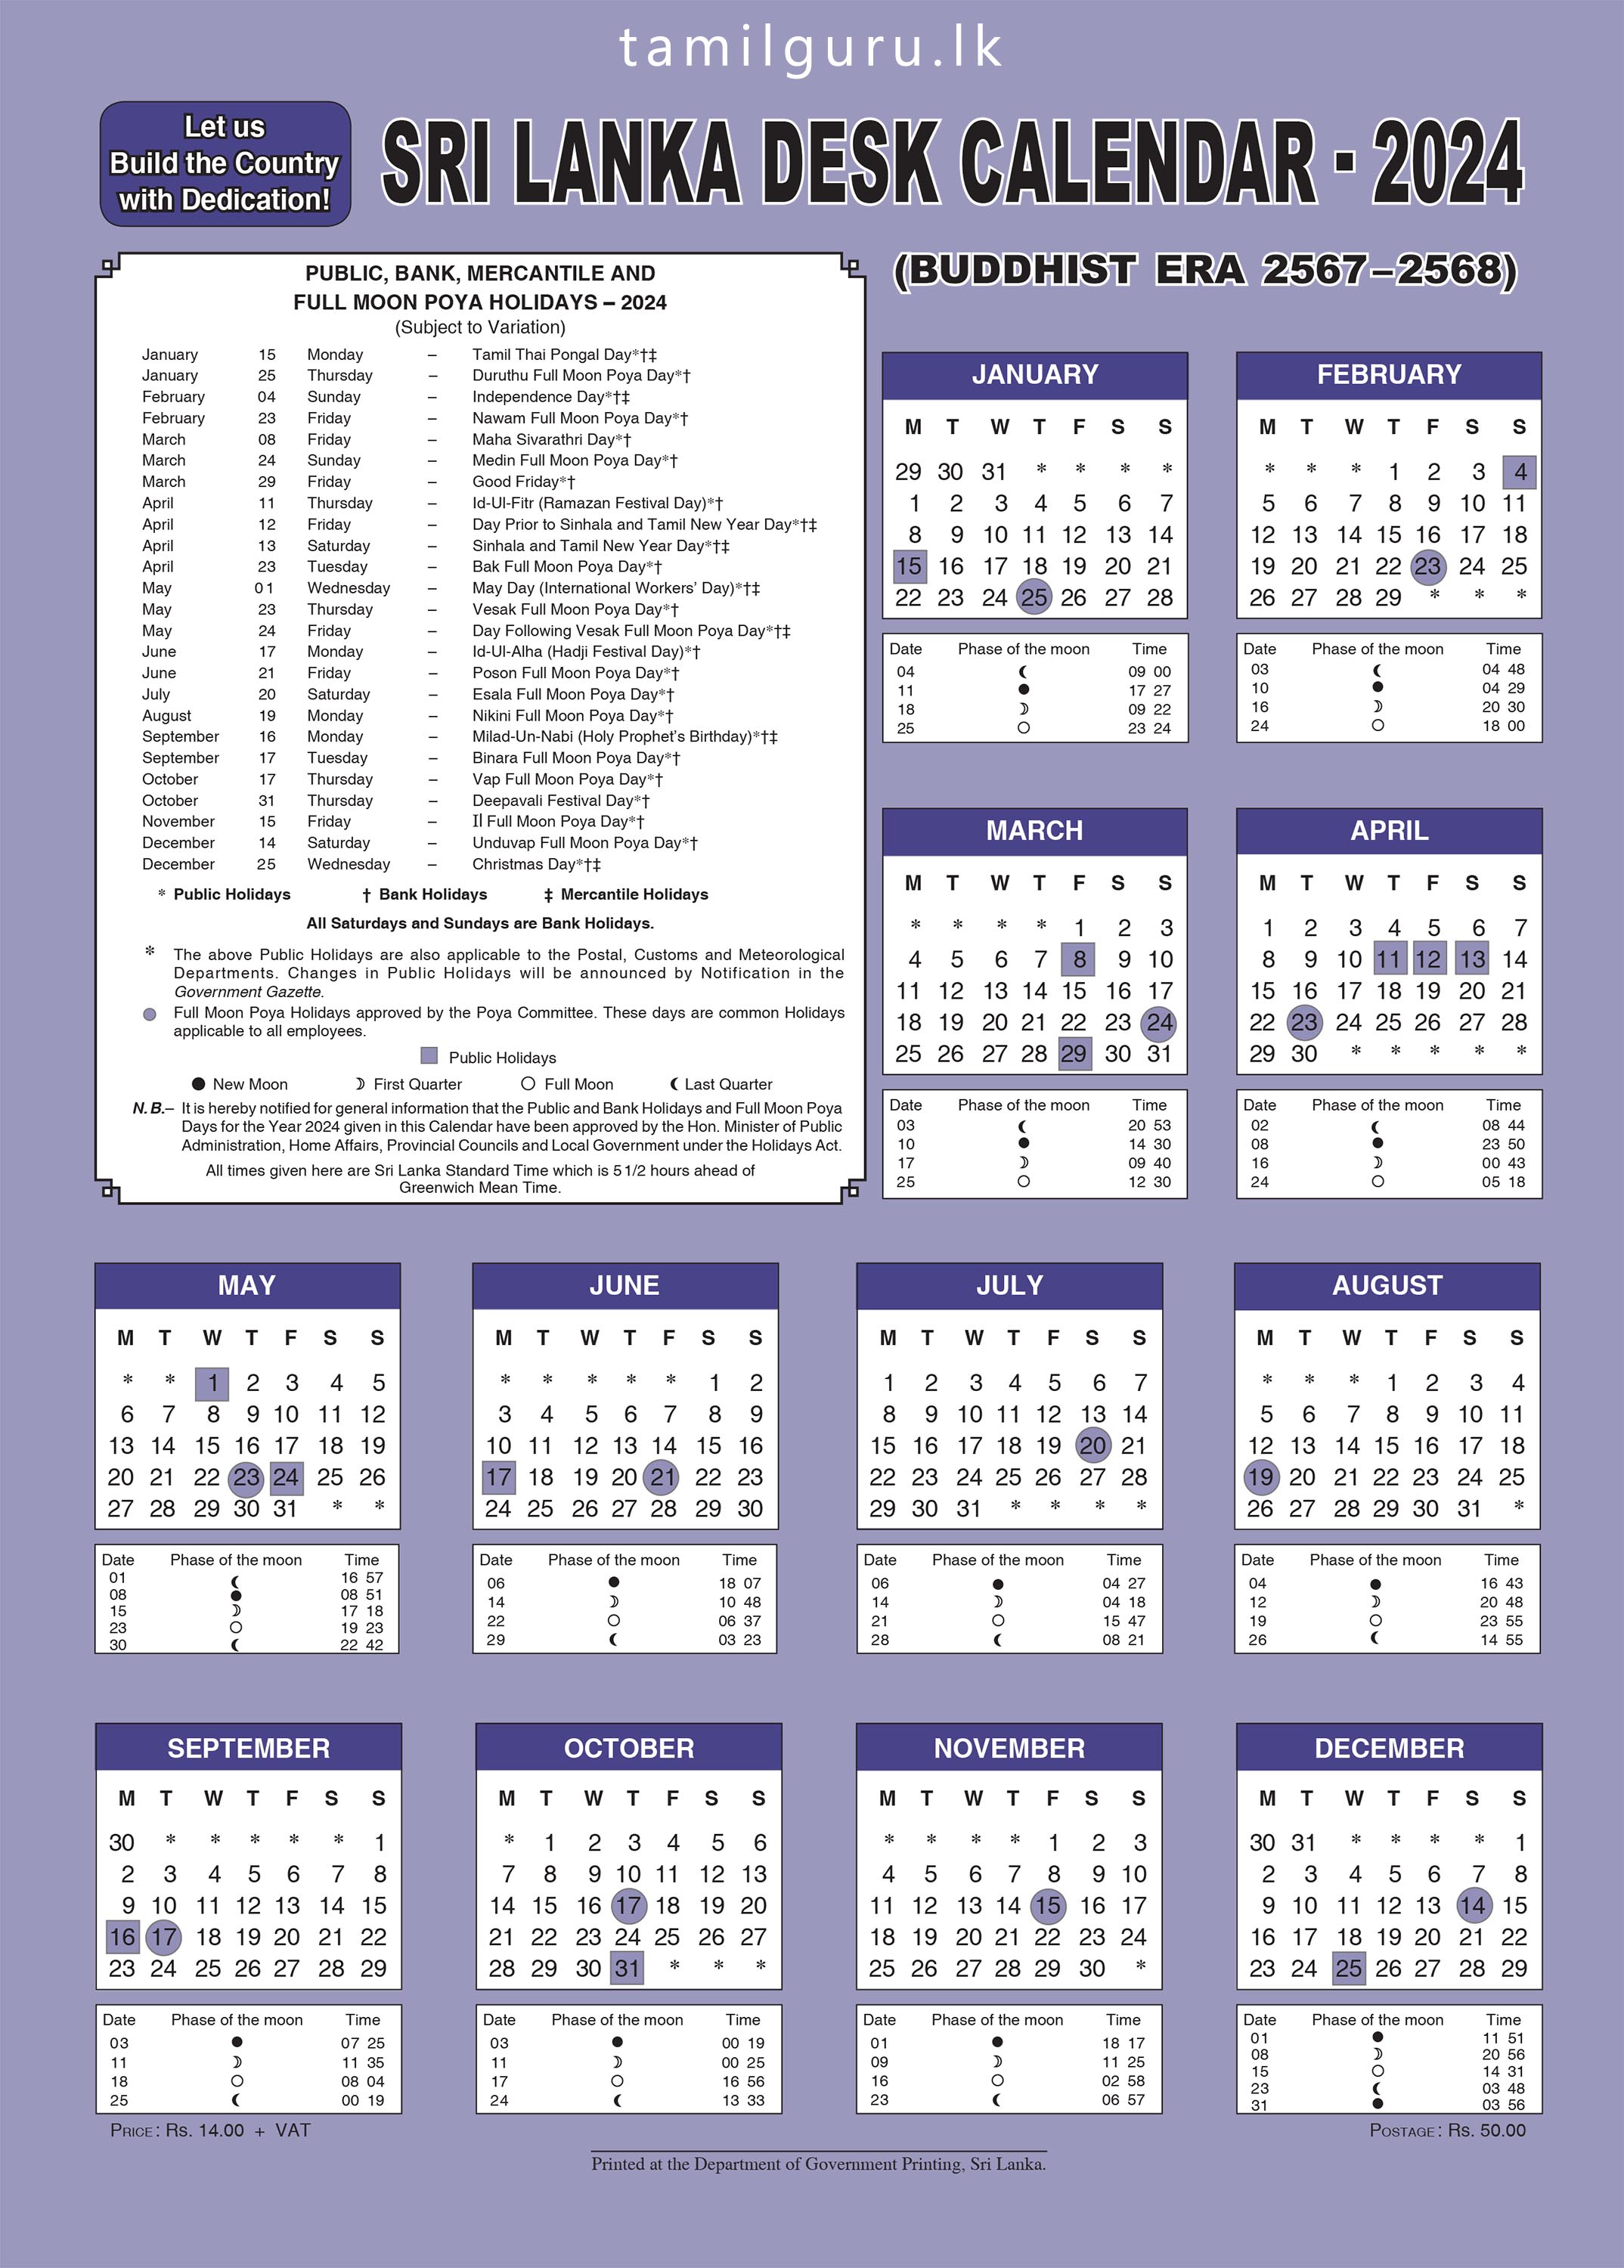 Sri Lanka Desk Calendar (2024) - Public, Bank, Mercantile, and Full Moon Poya Holidays